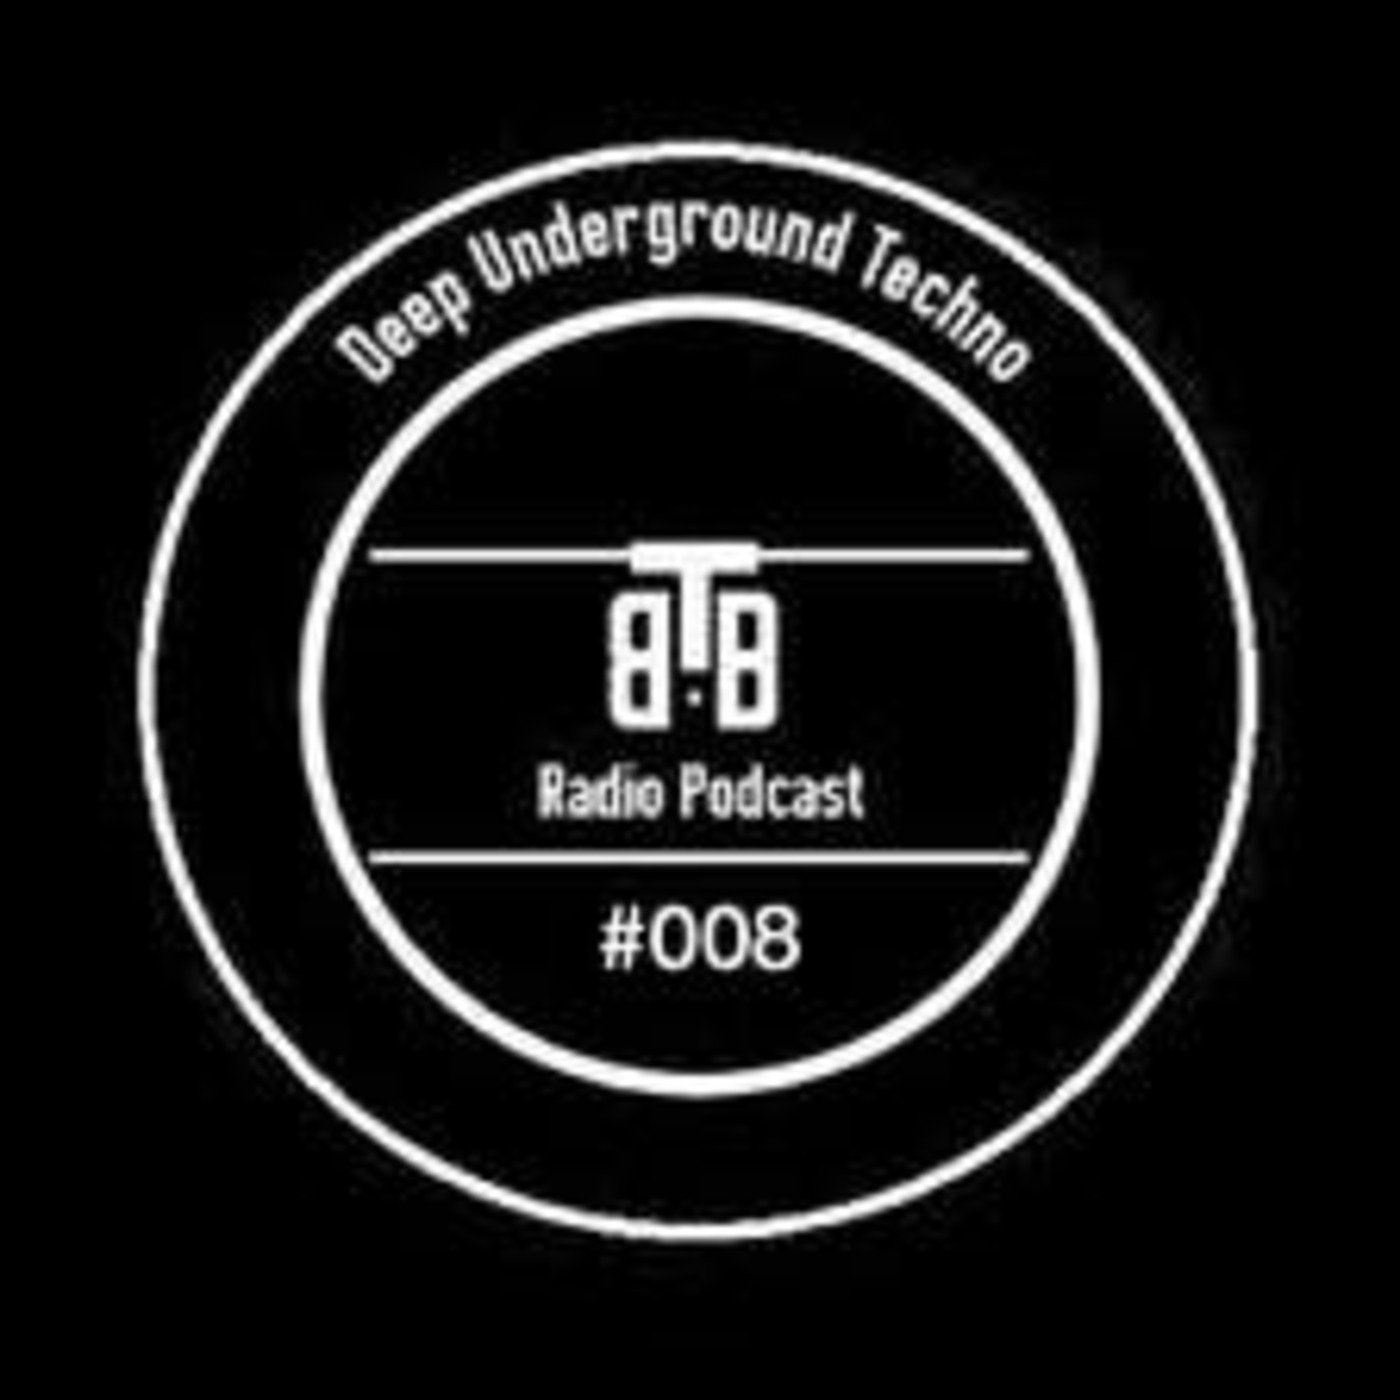 Timo Beck @ BBRadio Podcast#008